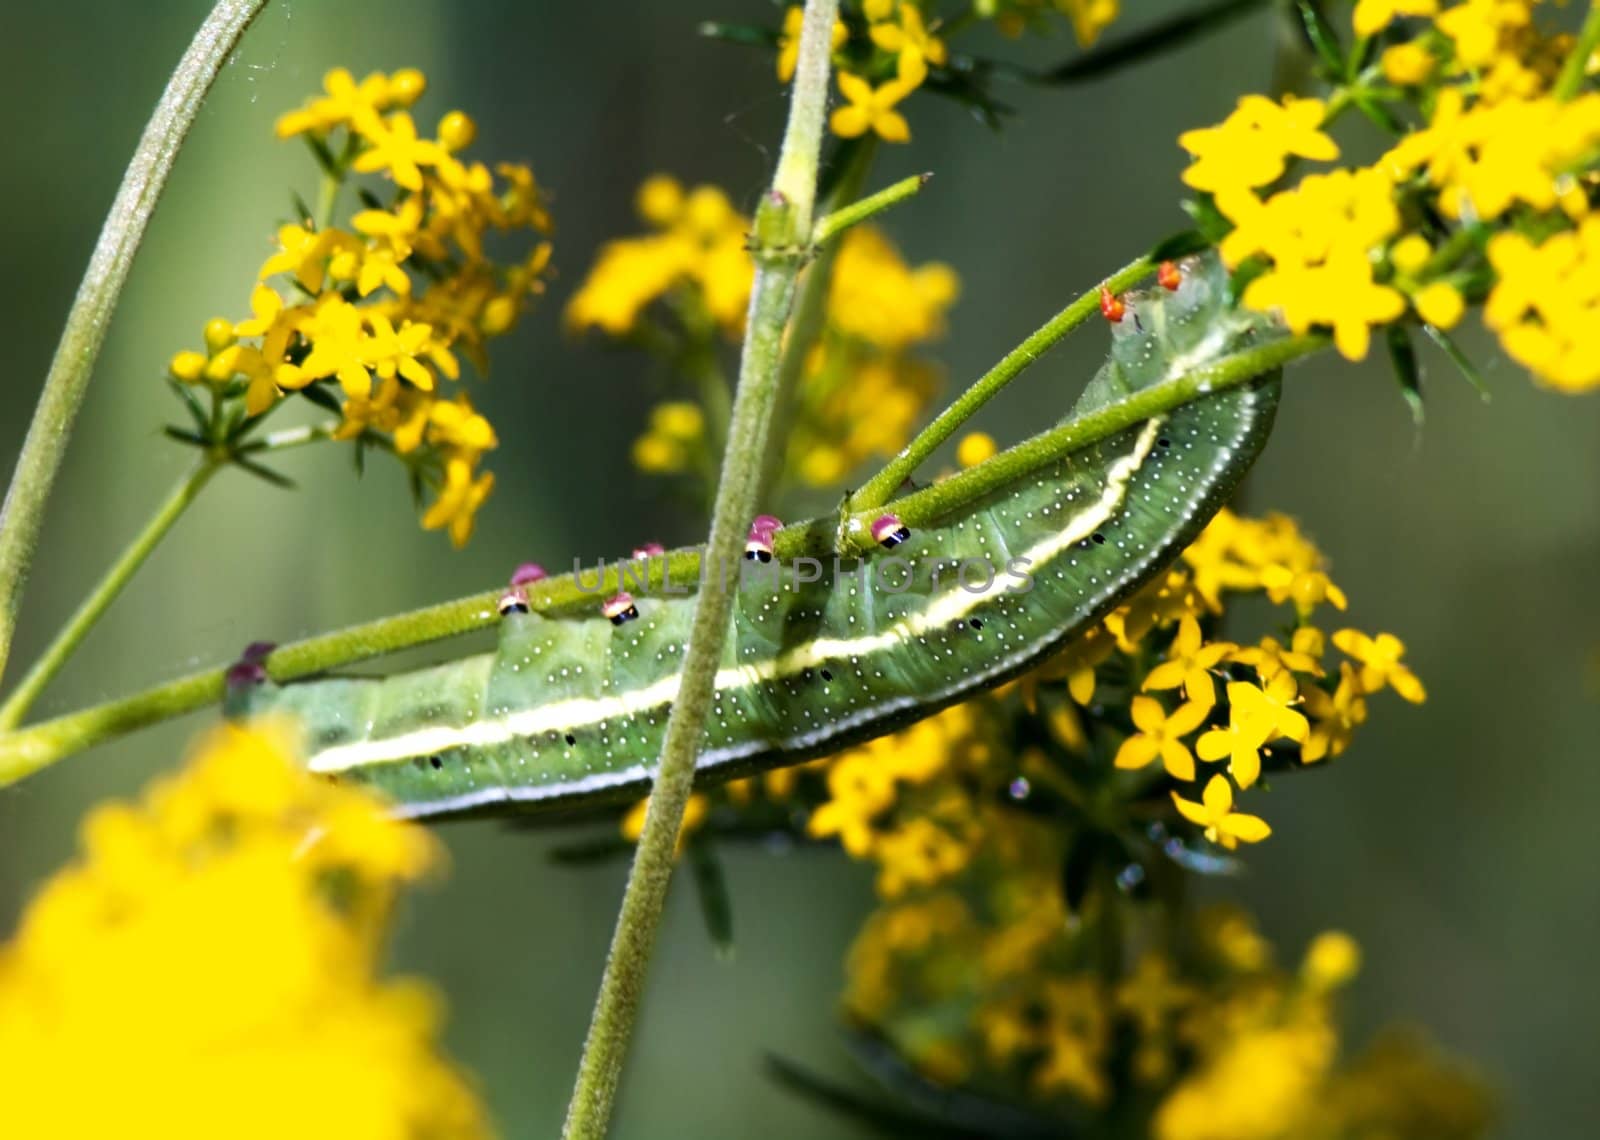 Larva of Butterfly by baggiovara